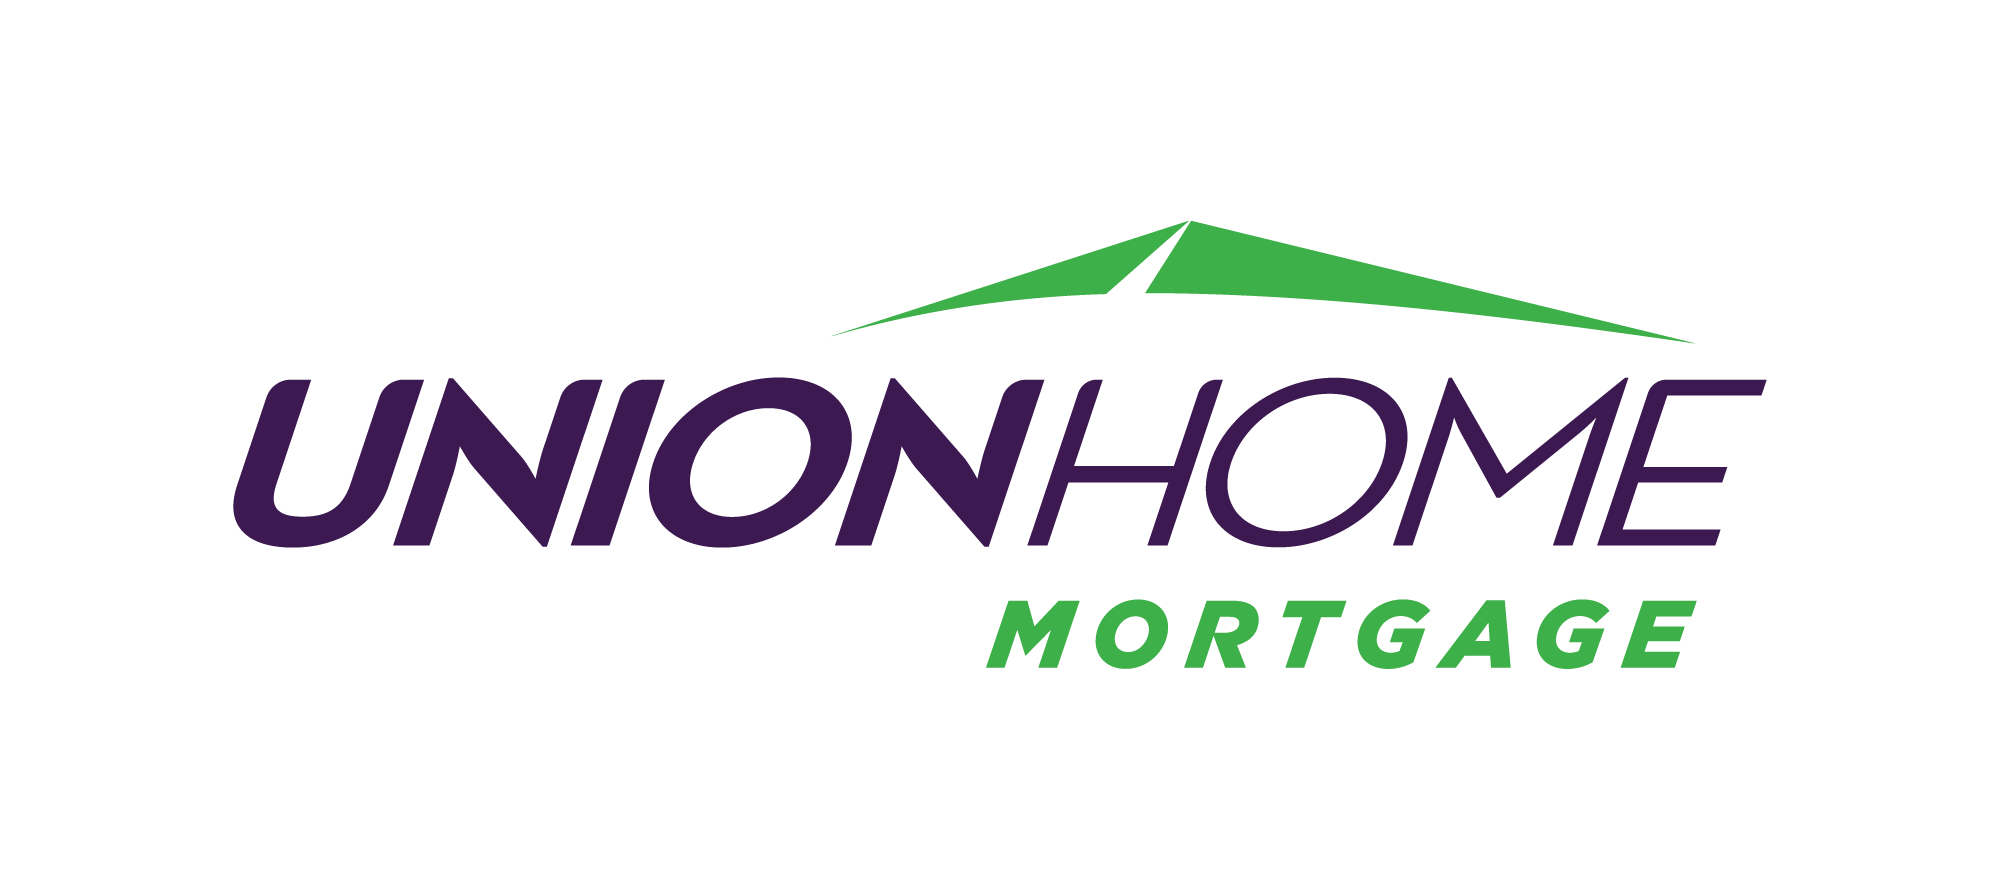 https://www.gasparillabowl.com/wp-content/uploads/2020/10/Union-Home-Mortgage-Logo1.png